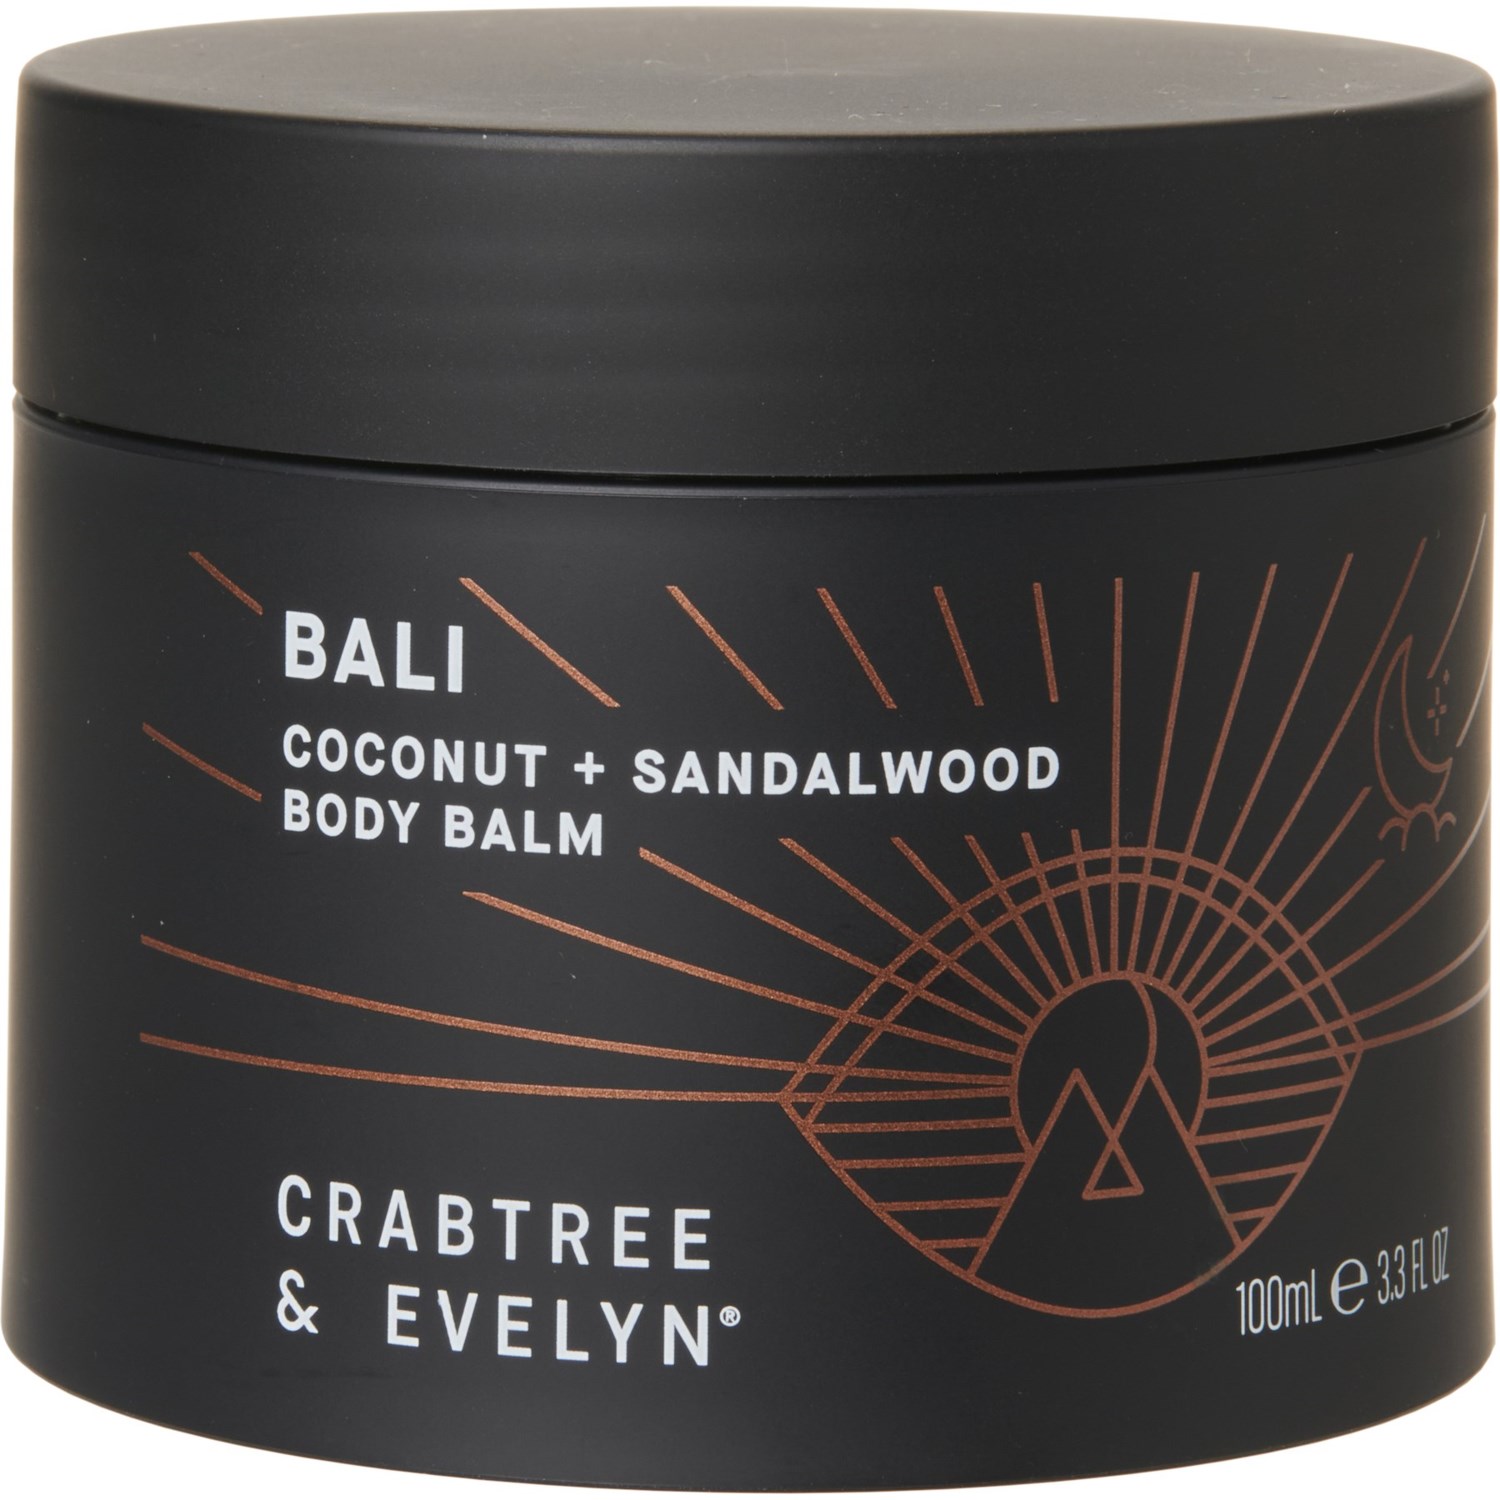 Crabtree & Evelyn Bali Coconut and Sandalwood Body Balm - 3.3 oz.